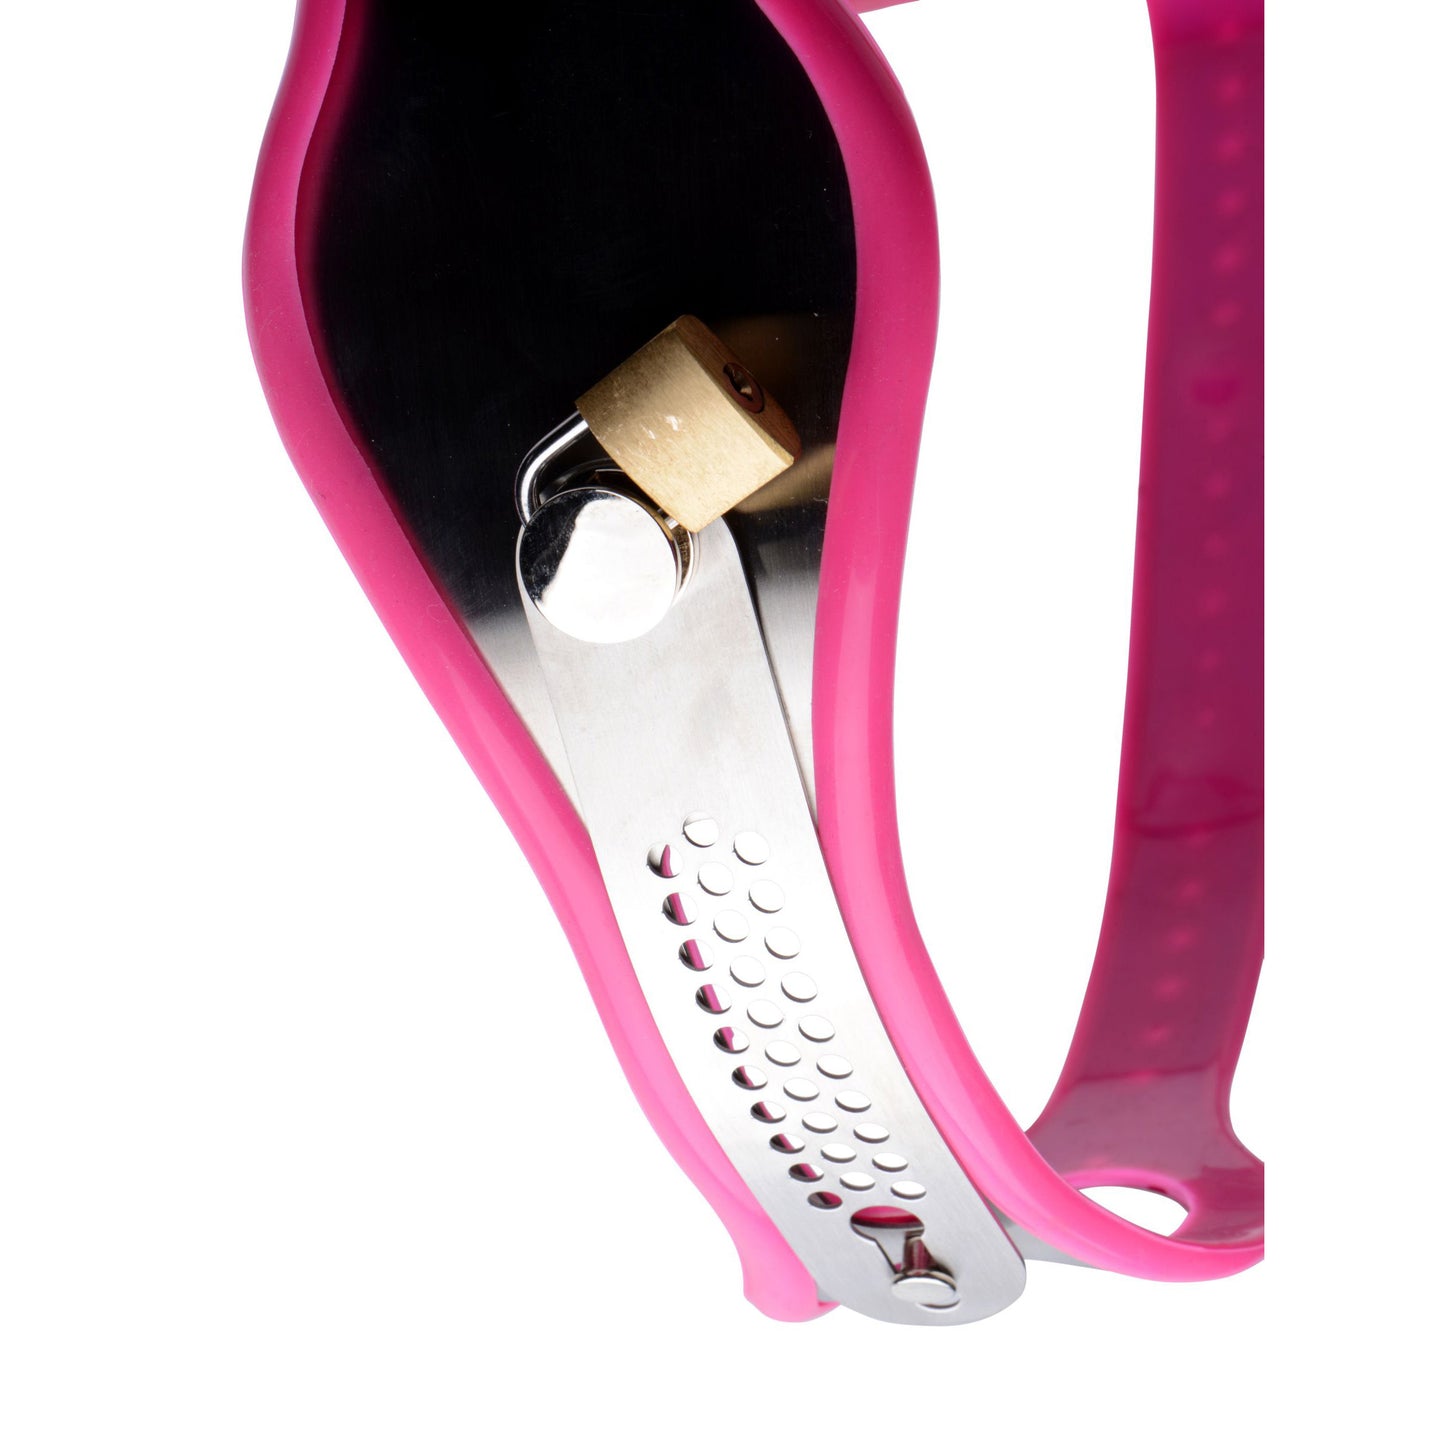 Pink Stainless Steel Adjustable Female Chastity Belt - UABDSM